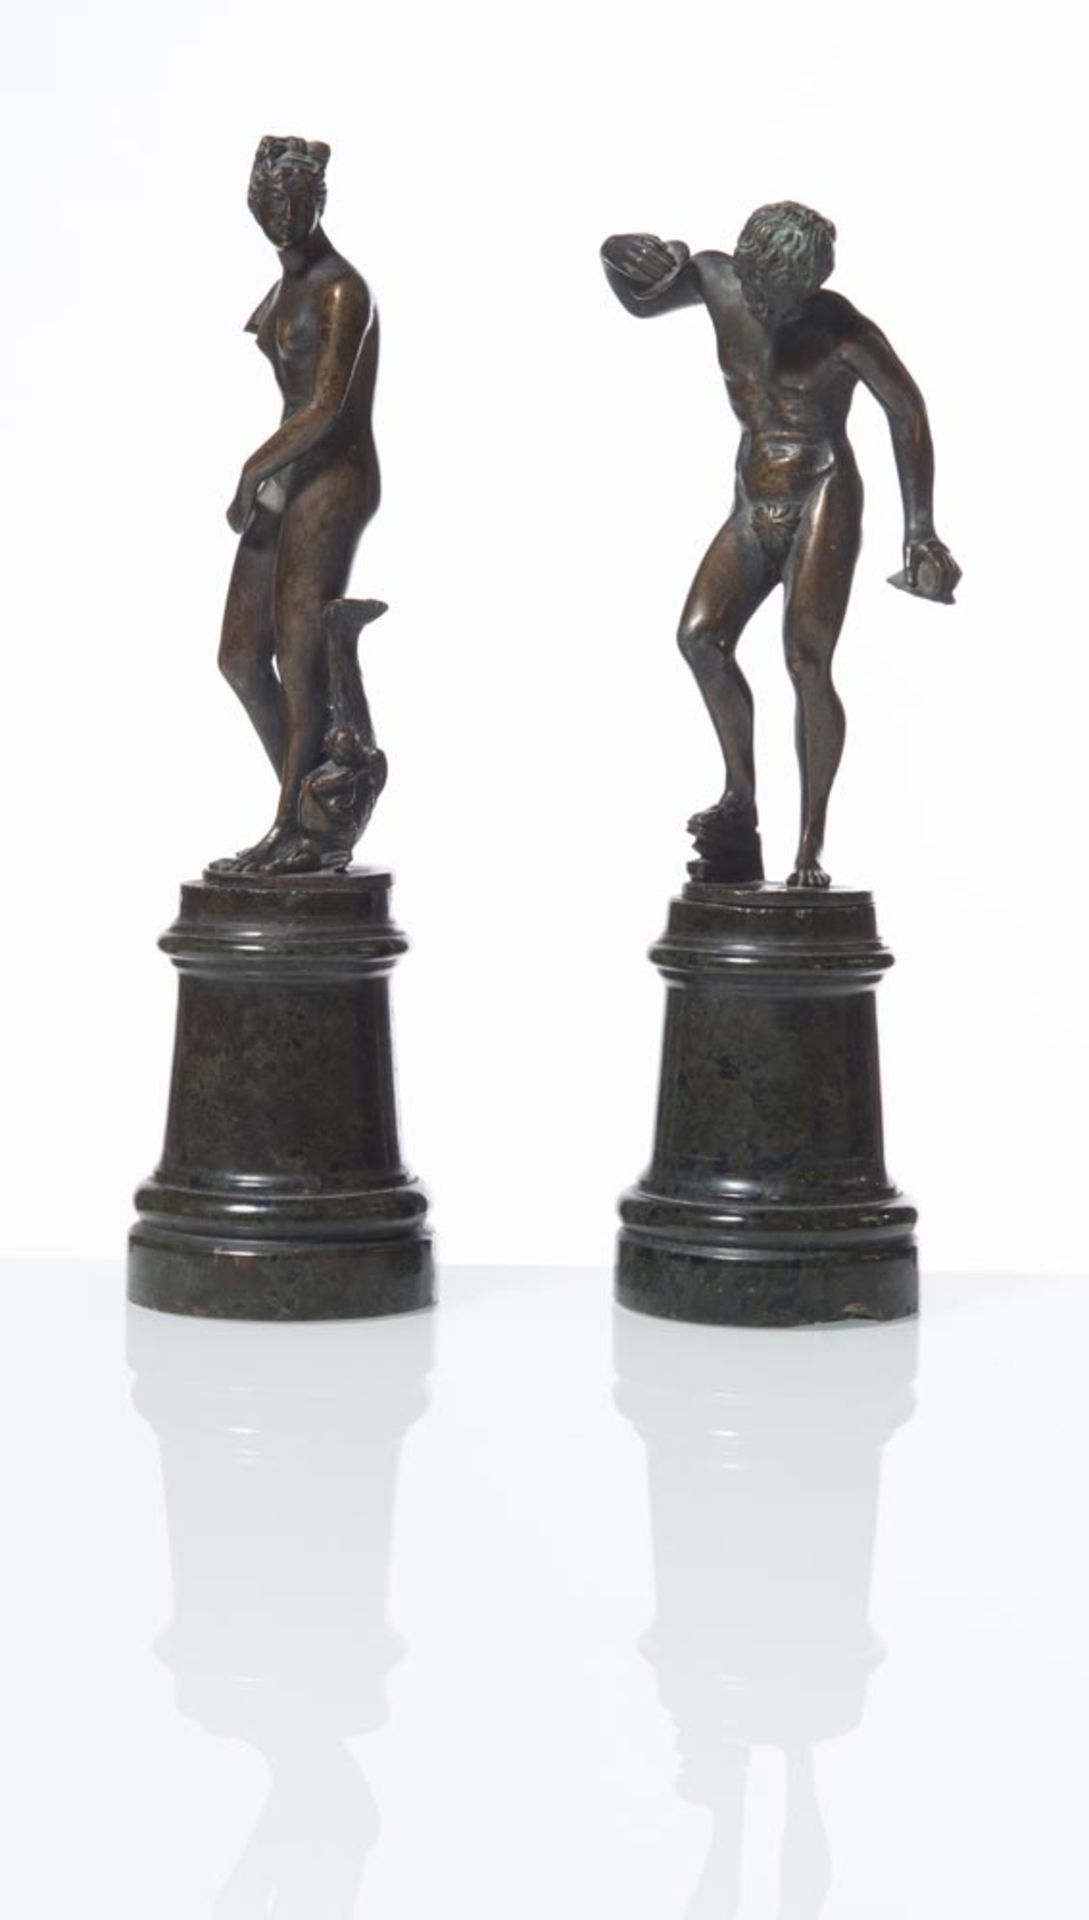 Pair of bronze sculpture, "Venere Anadiomene" - "Pan suona i cimbali", late 18th-early 19th Century